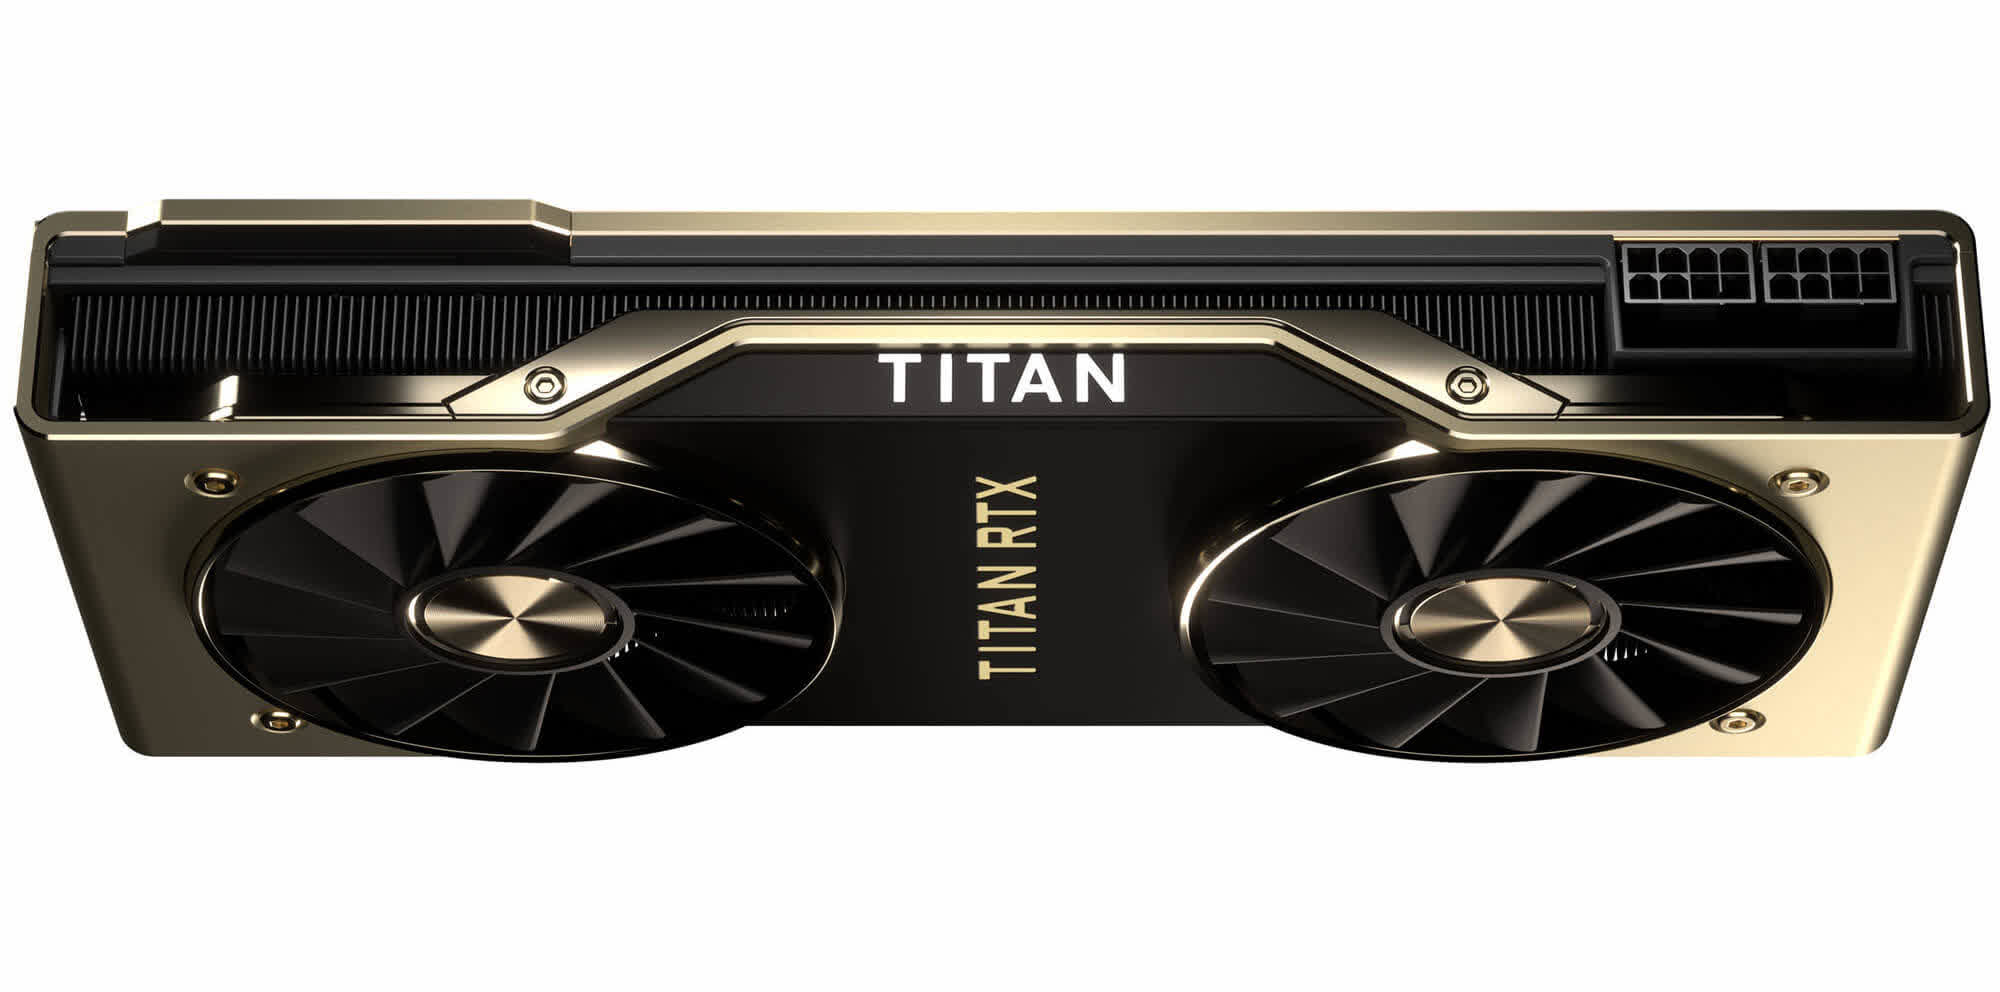 Nvidia GeForce RTX Titan 24GB GDDR6 Reviews, Pros and | TechSpot